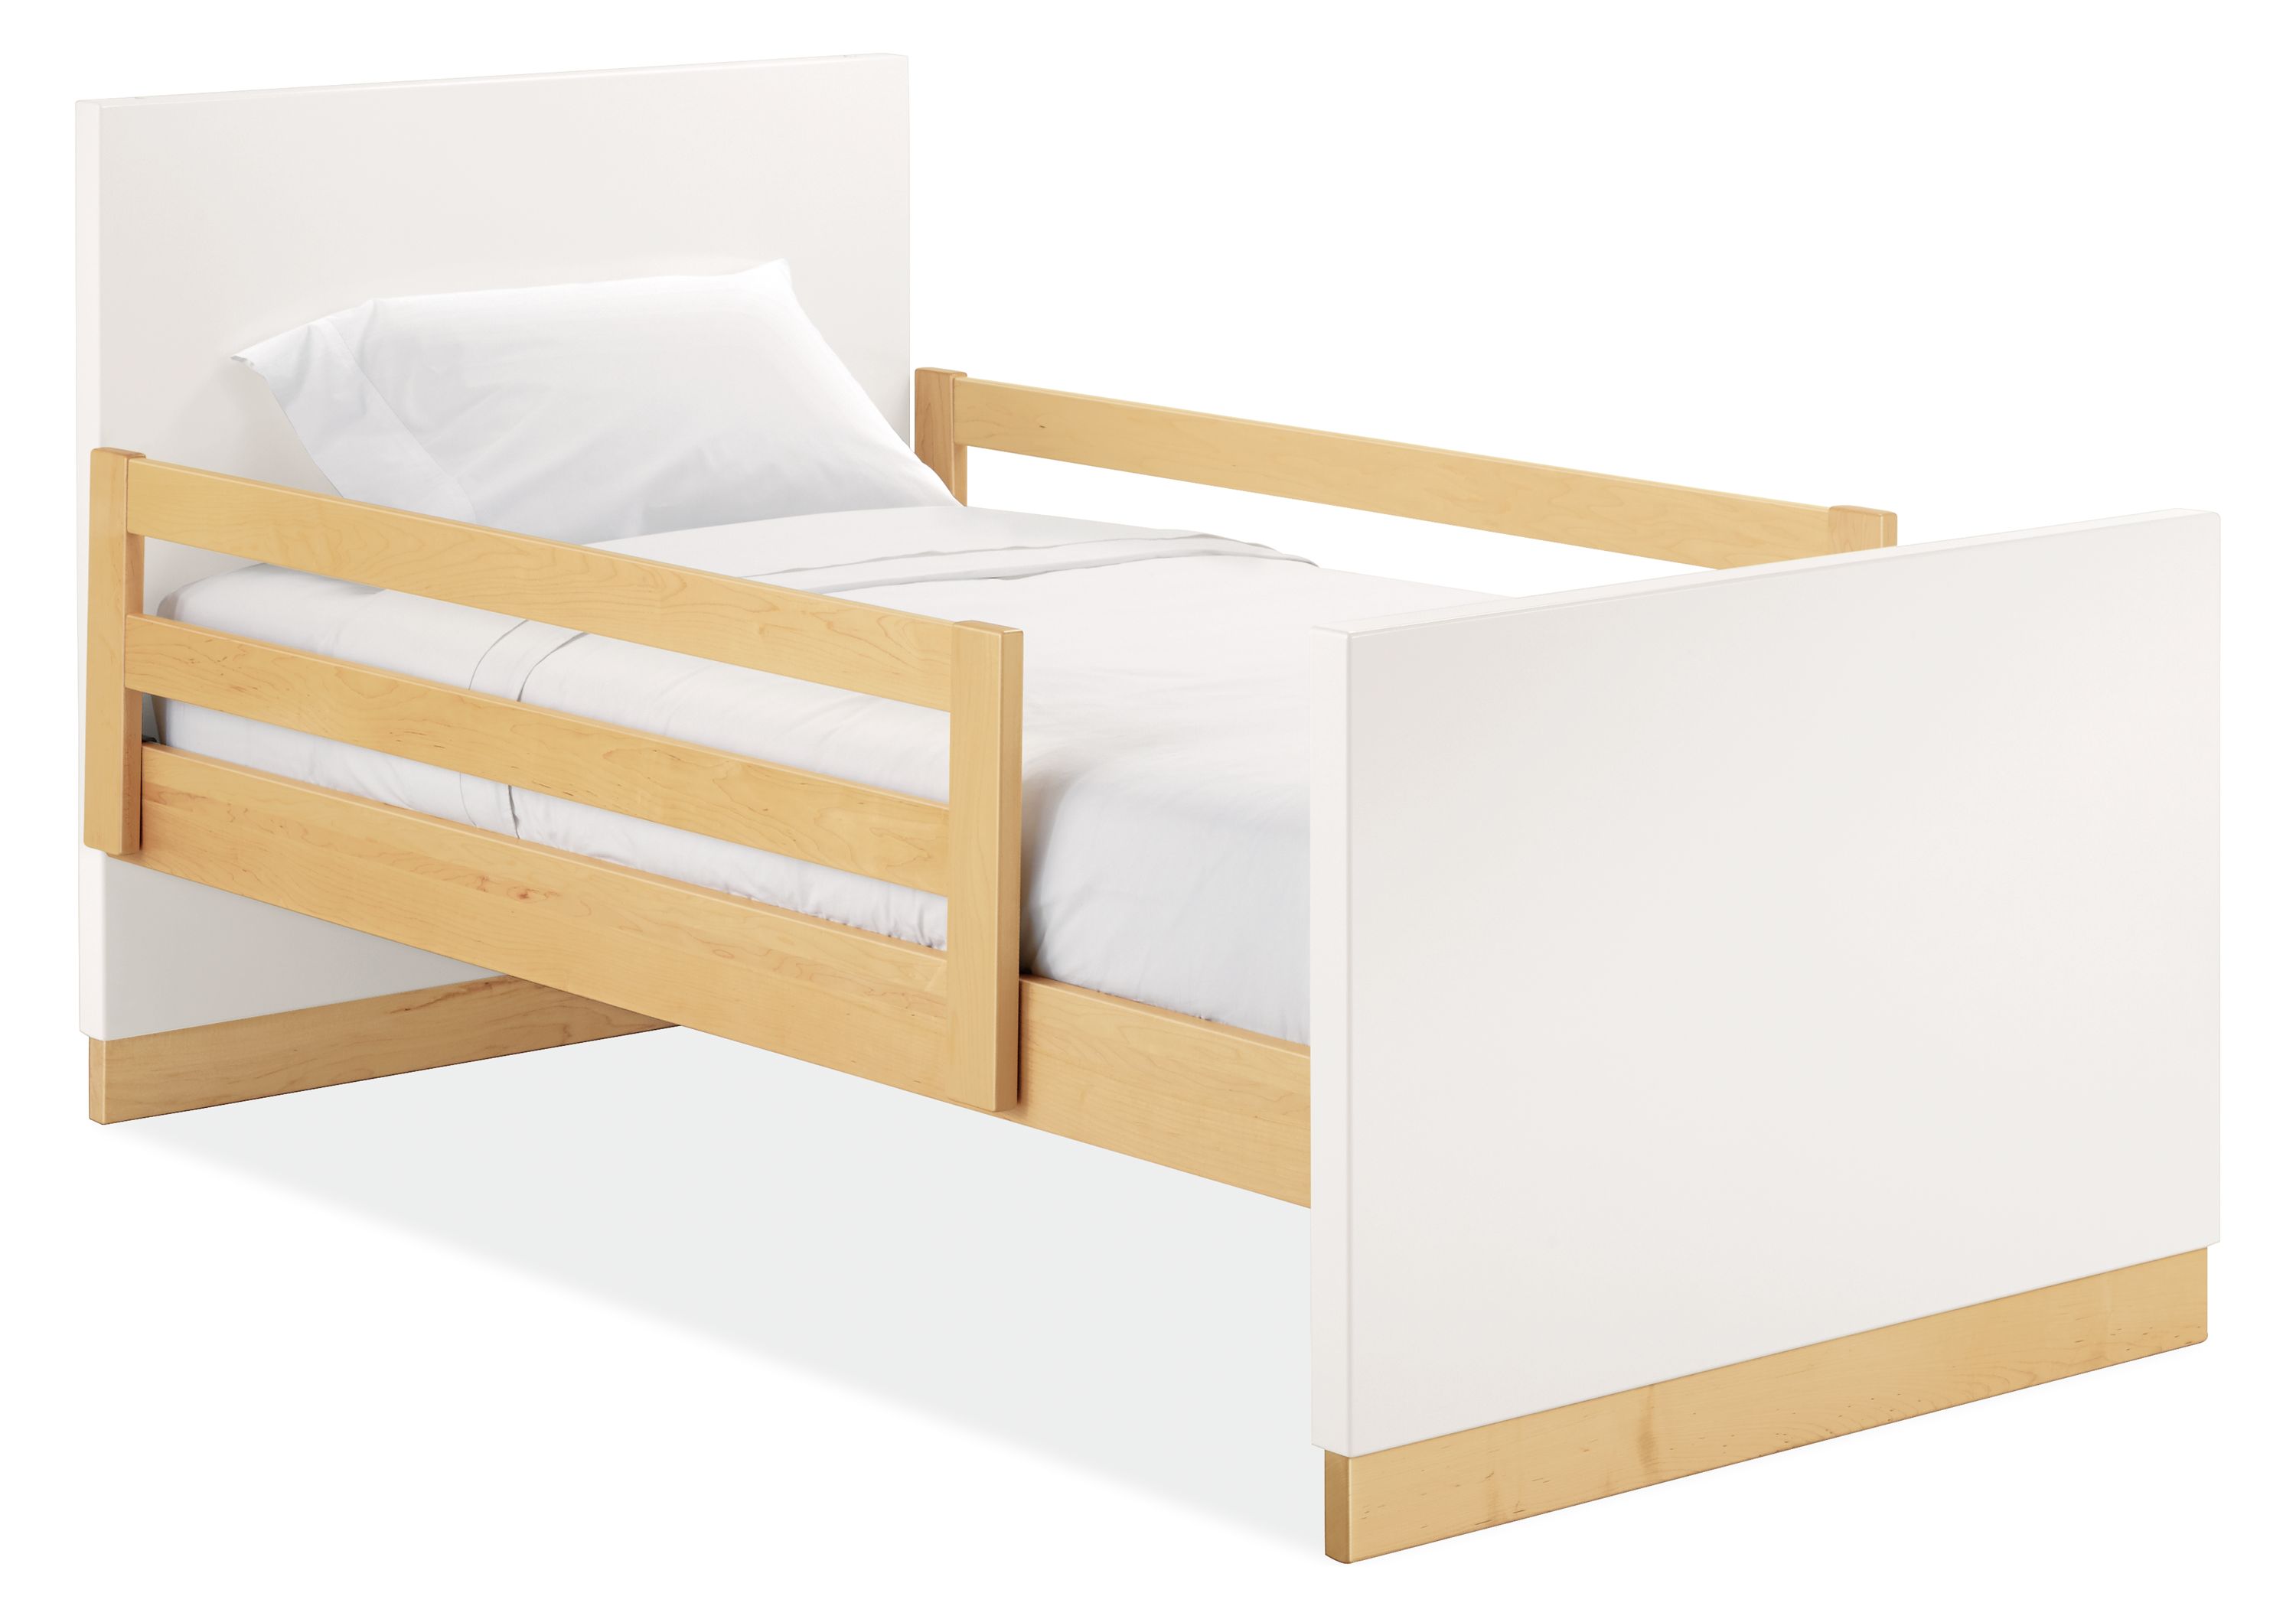 Moda Bed Guardrails Modern Kids, Wooden Guard Rail For Twin Bed